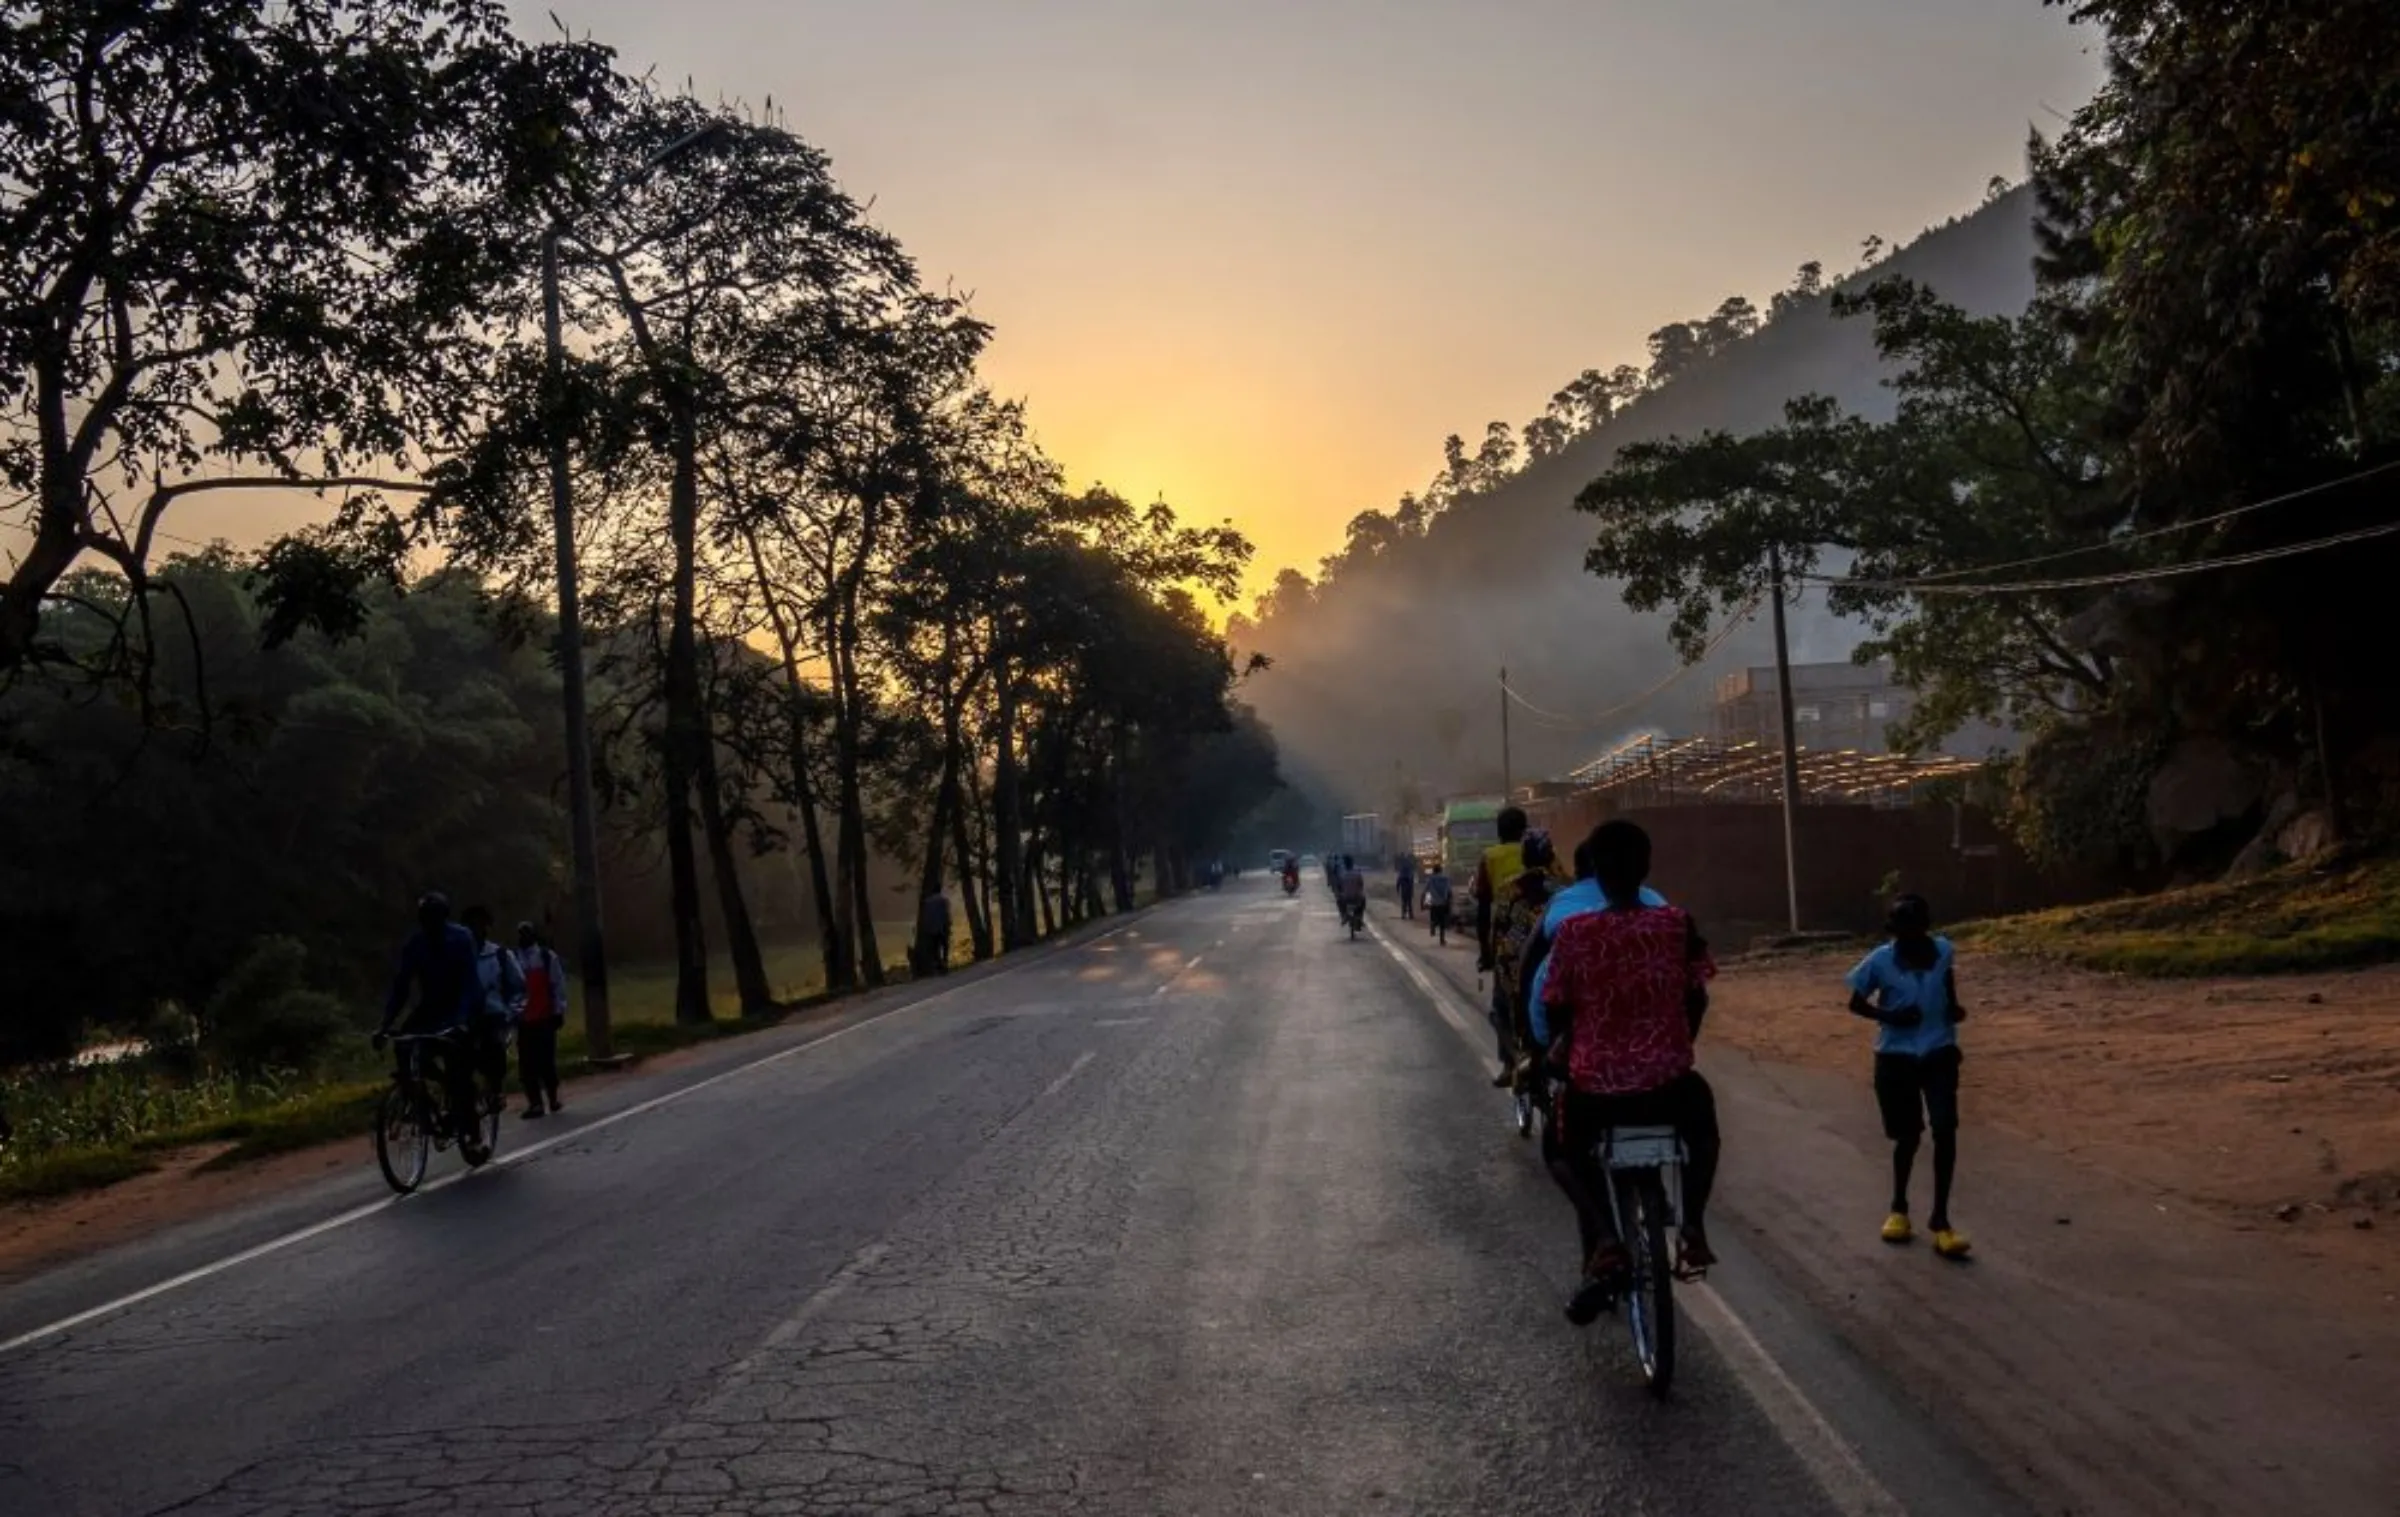 Residents cycle along a road at dawn on the outskirts of Kigali, Rwanda June 15, 2022. REUTERS/Jean Bizimana